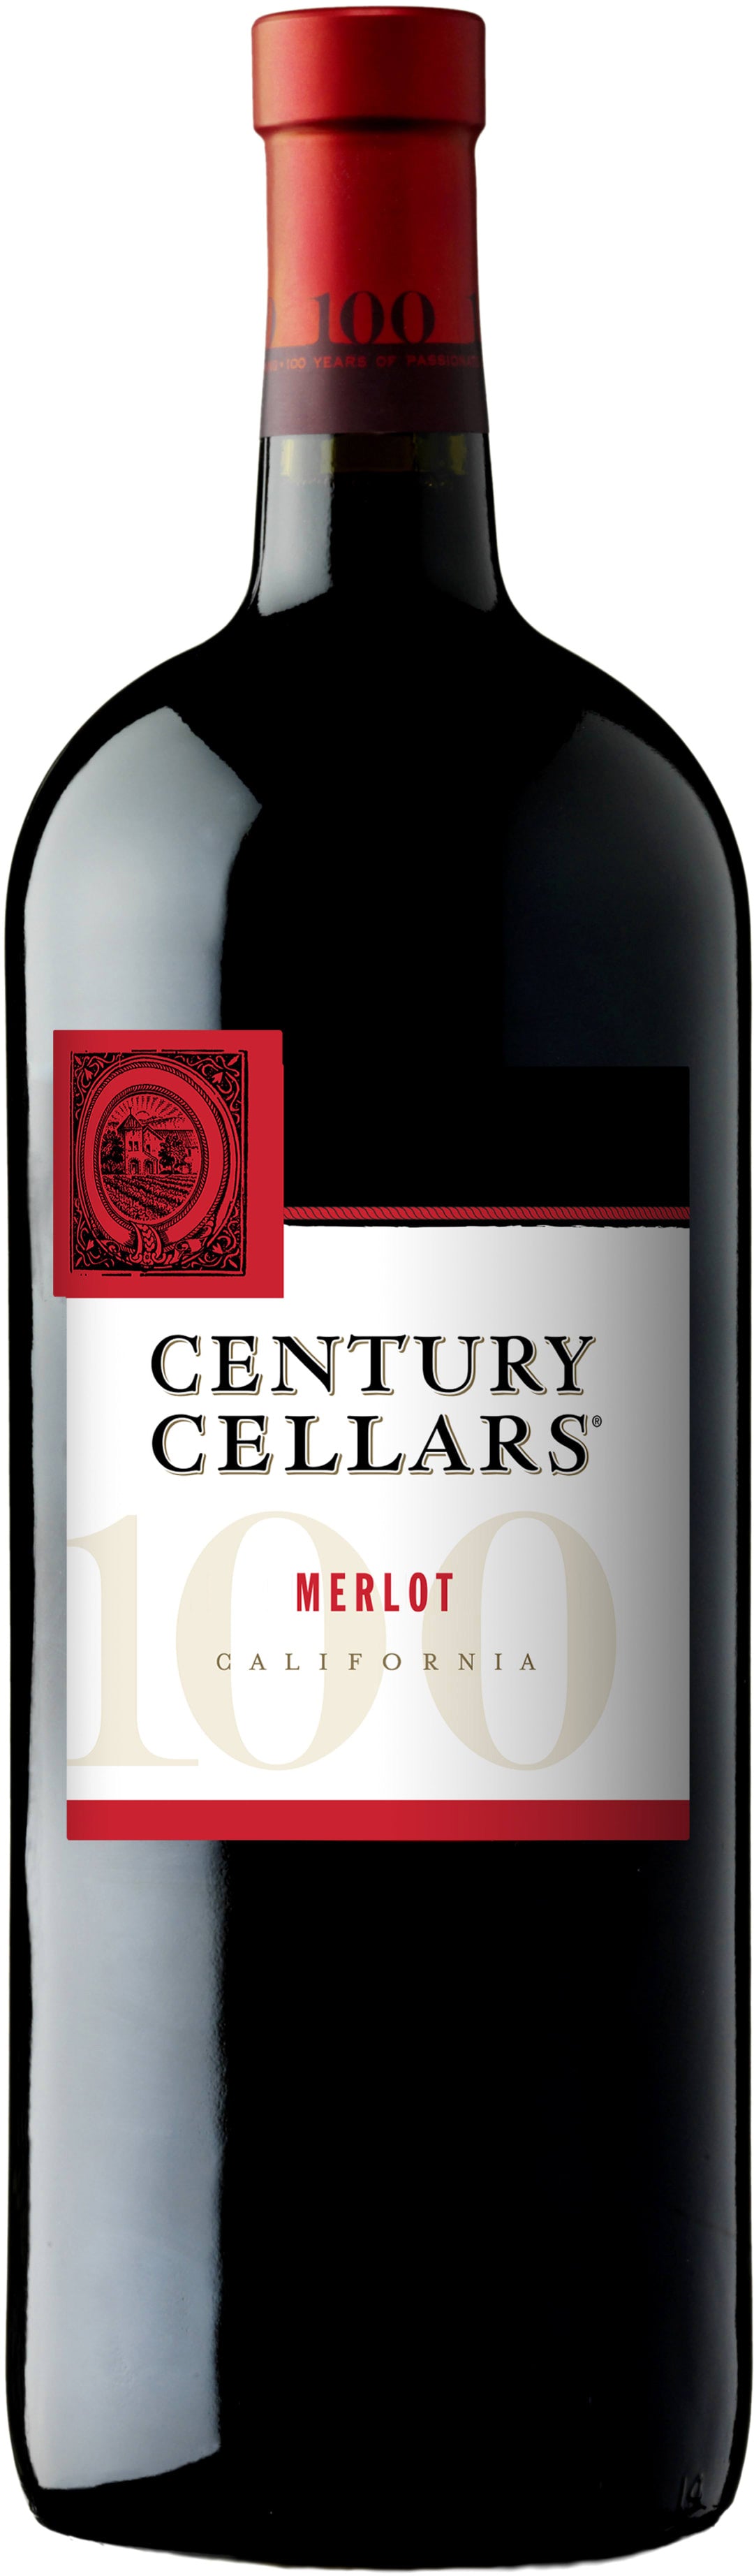 Century Cellars Merlot 2017